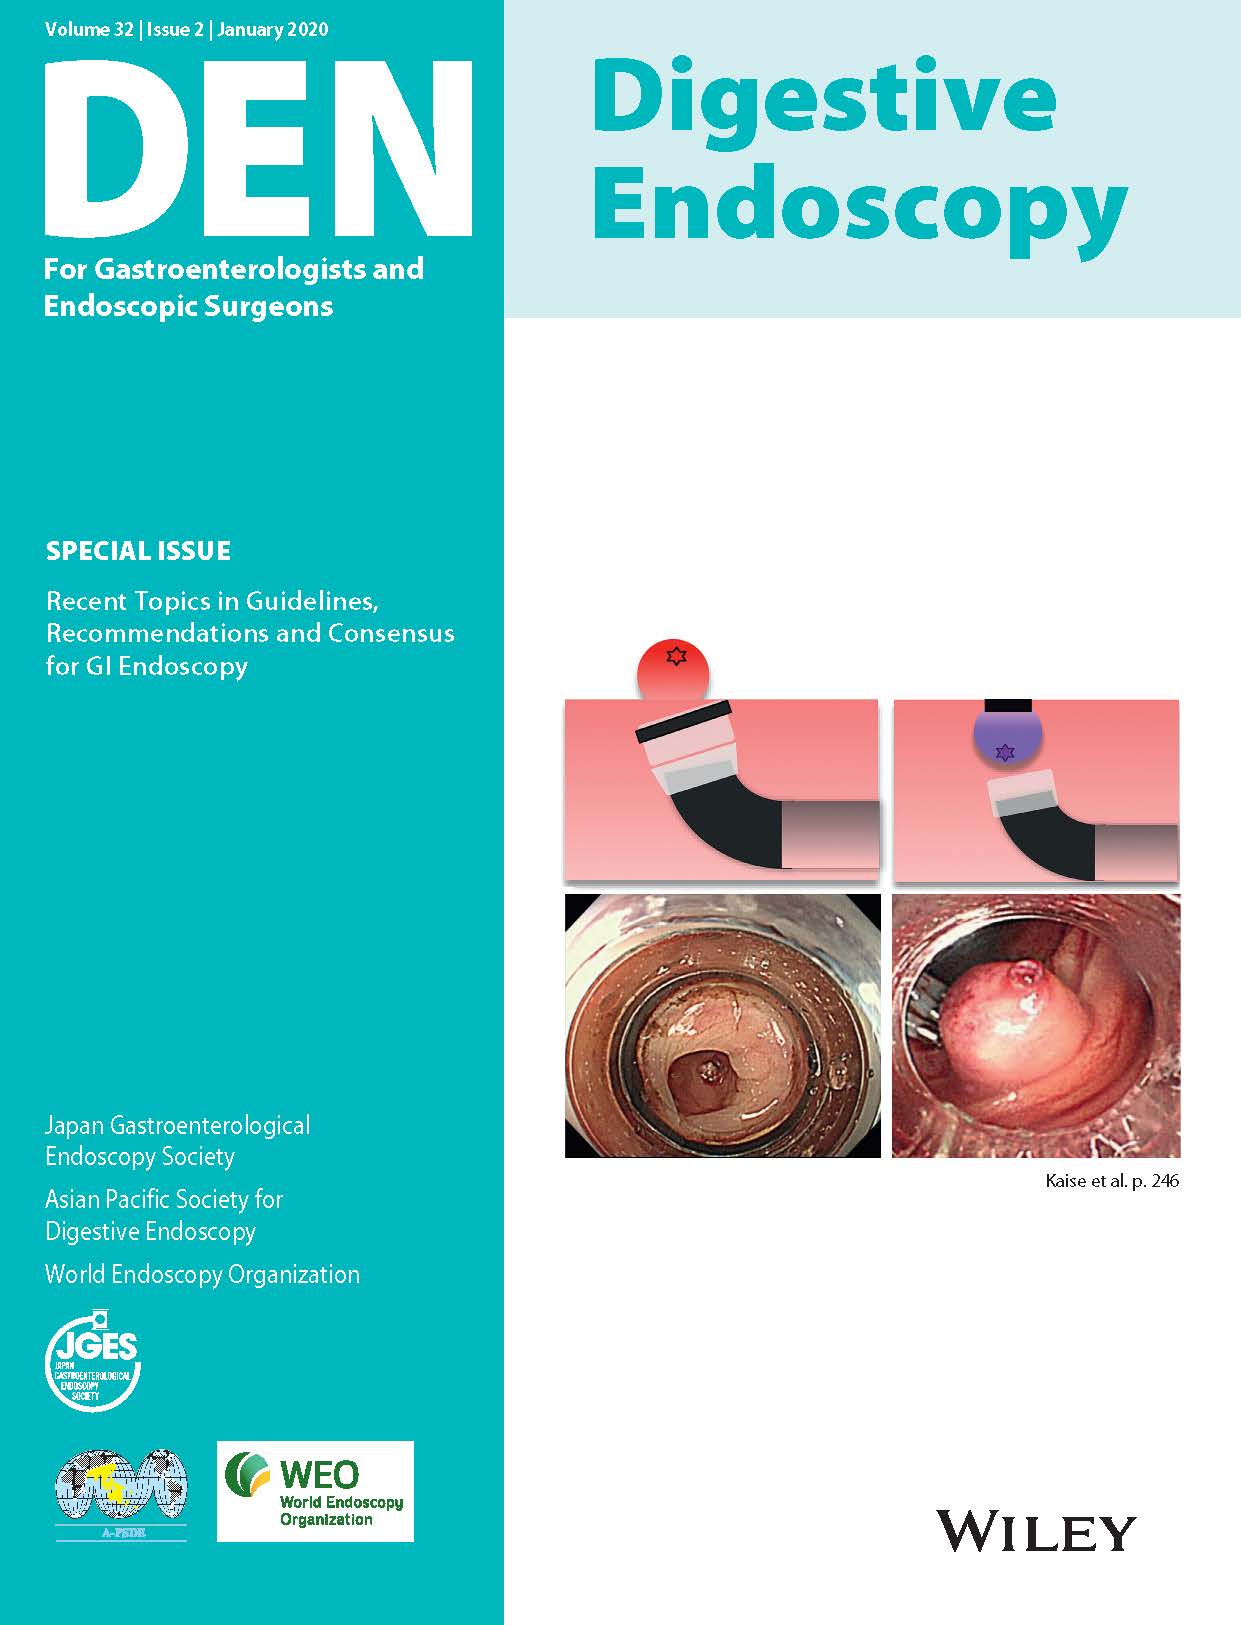 Digestive Endoscopy Vol32-2